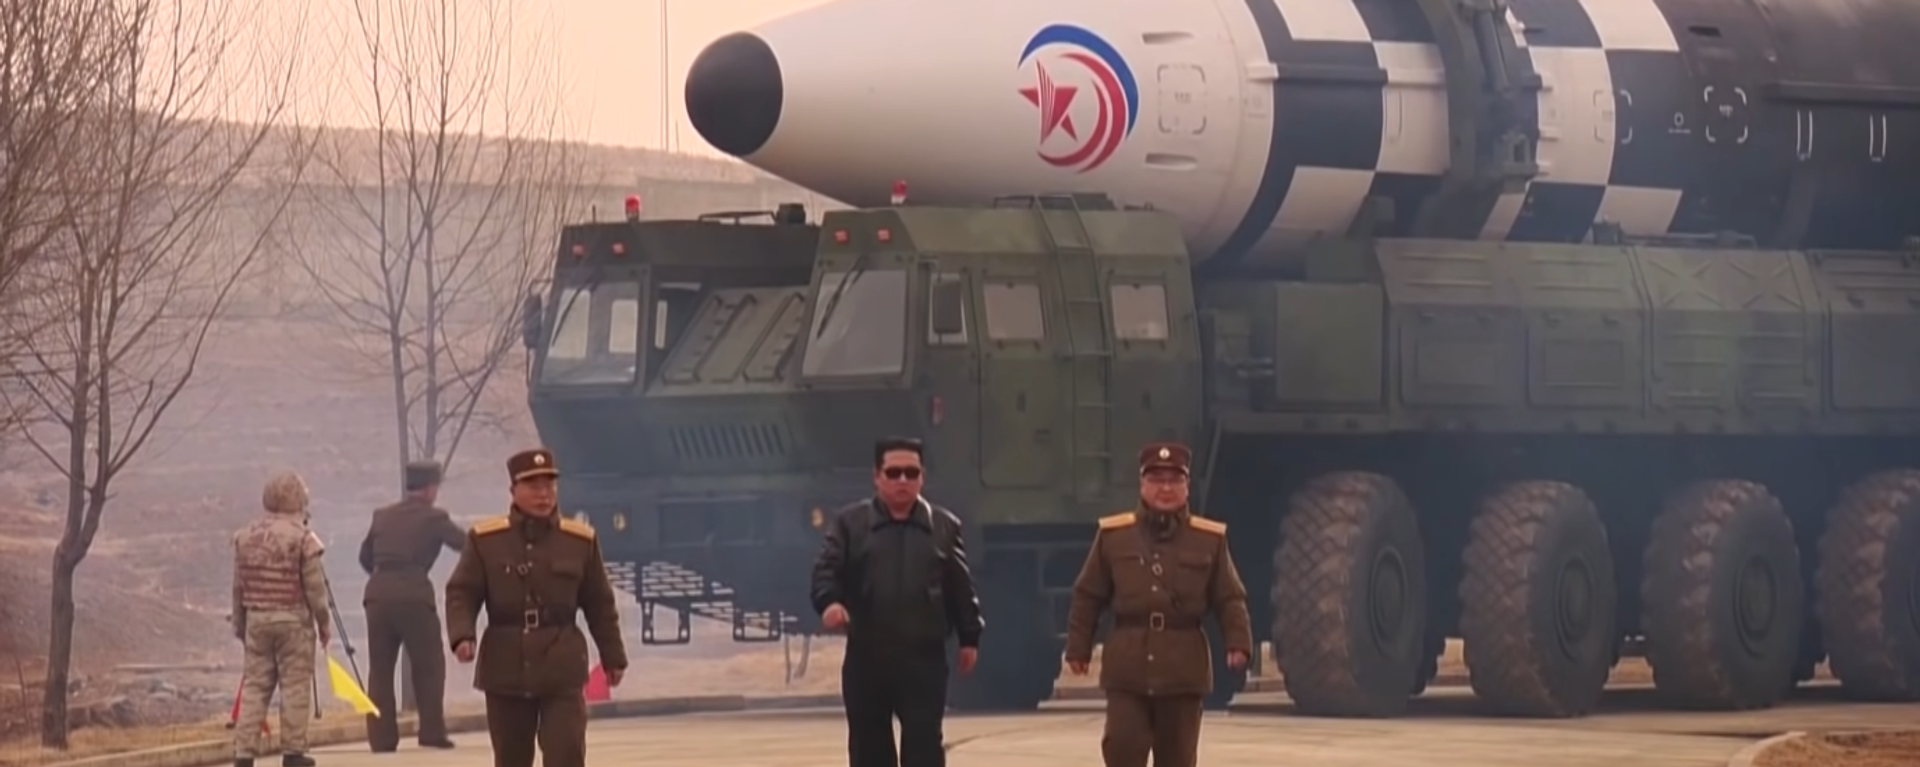 North Korean leader Kim Jong-un takes part in launch of heavy intercontinental ballistic missile test. - Sputnik International, 1920, 26.12.2022